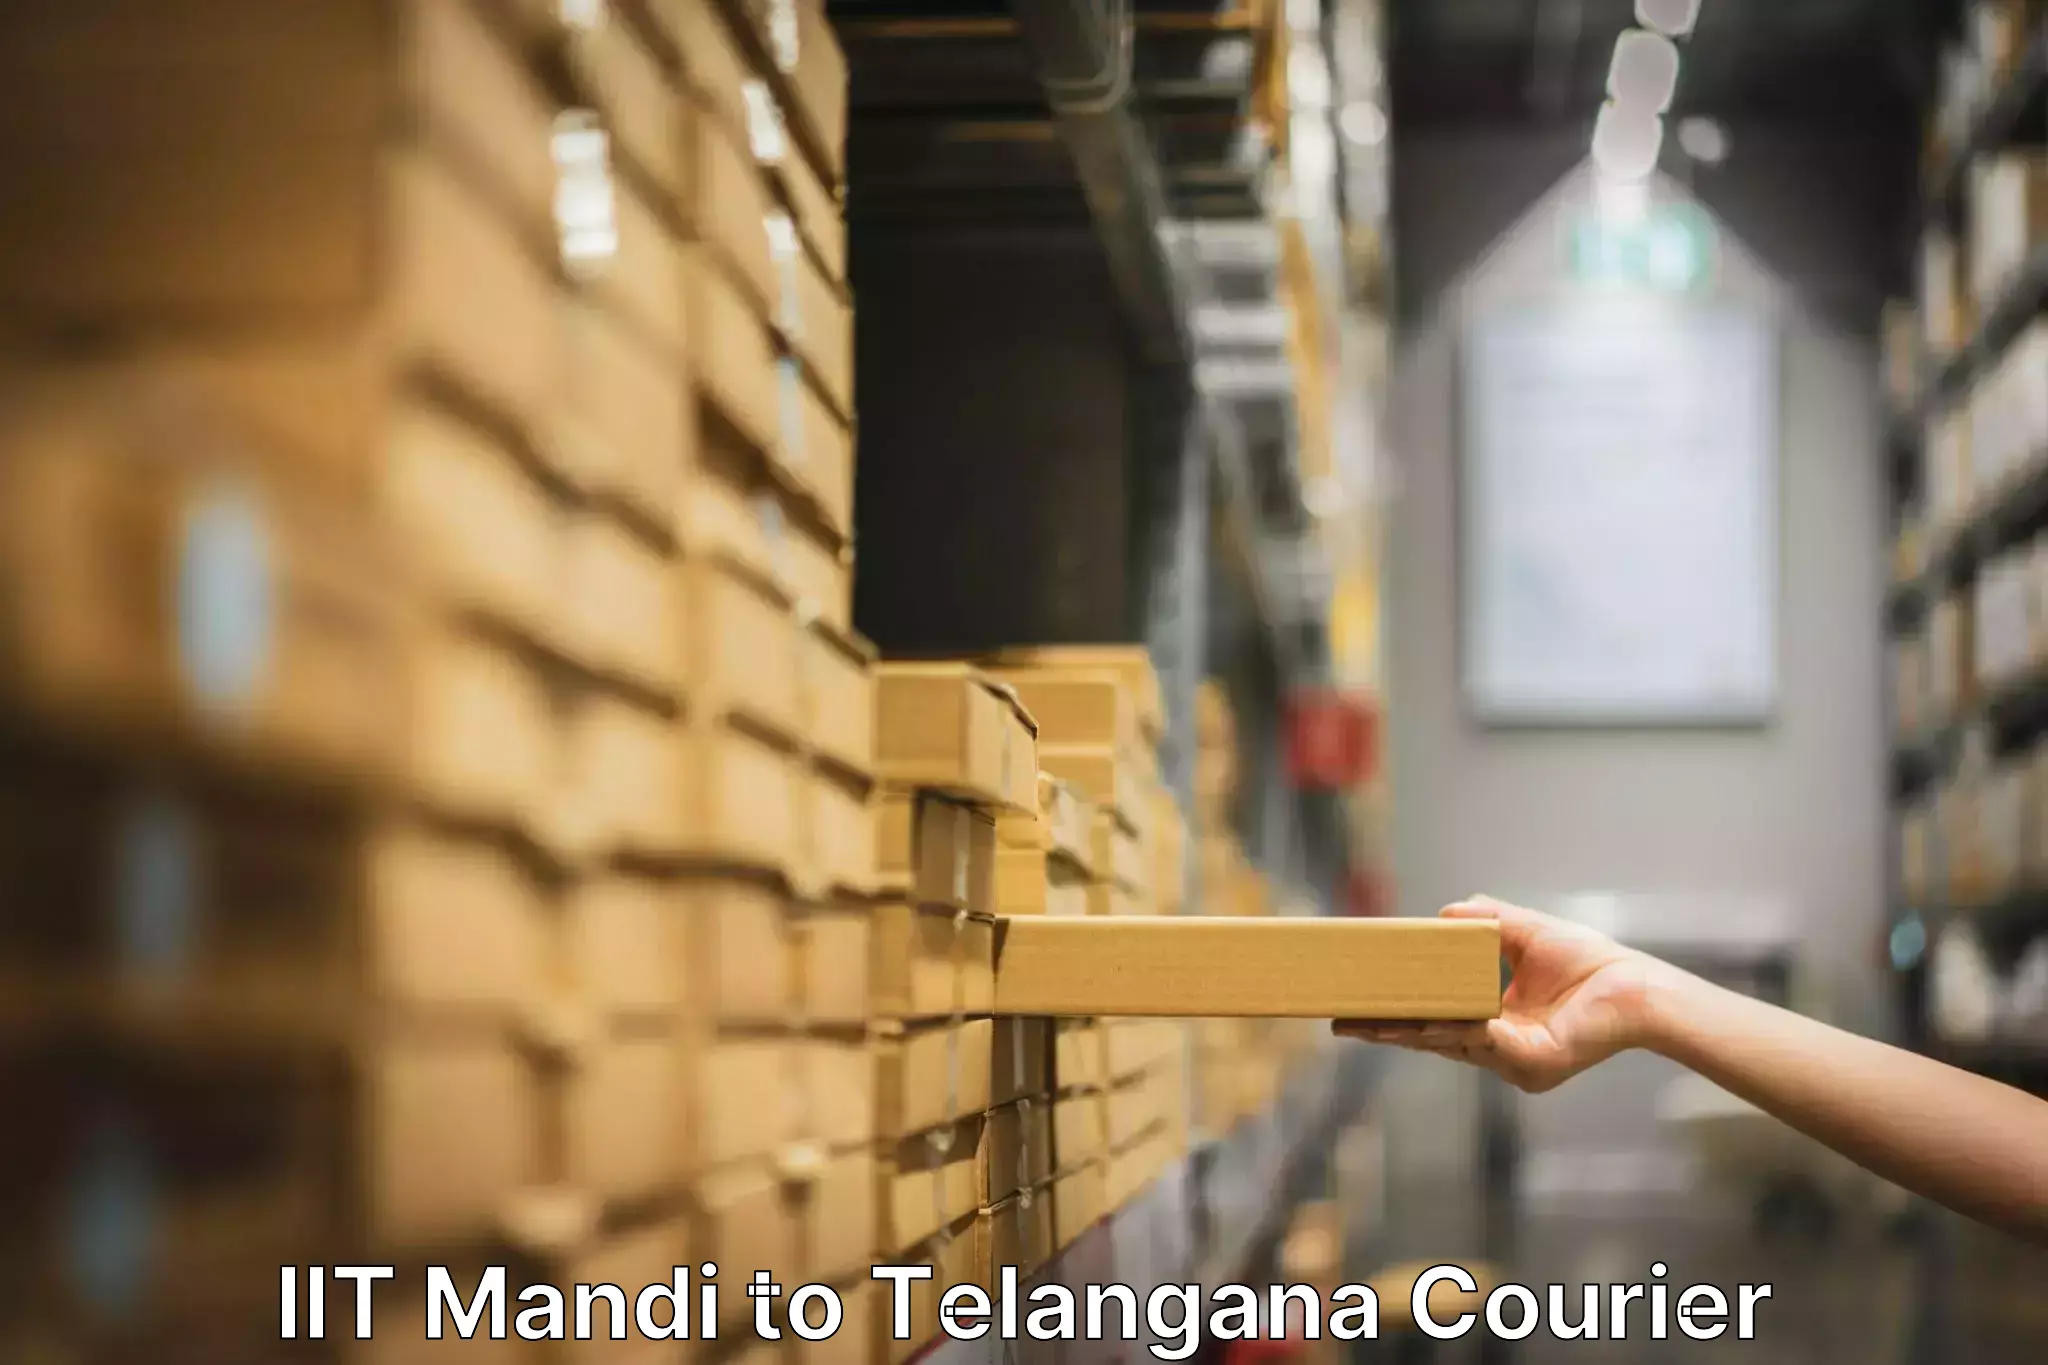 Furniture transport company IIT Mandi to Tallada